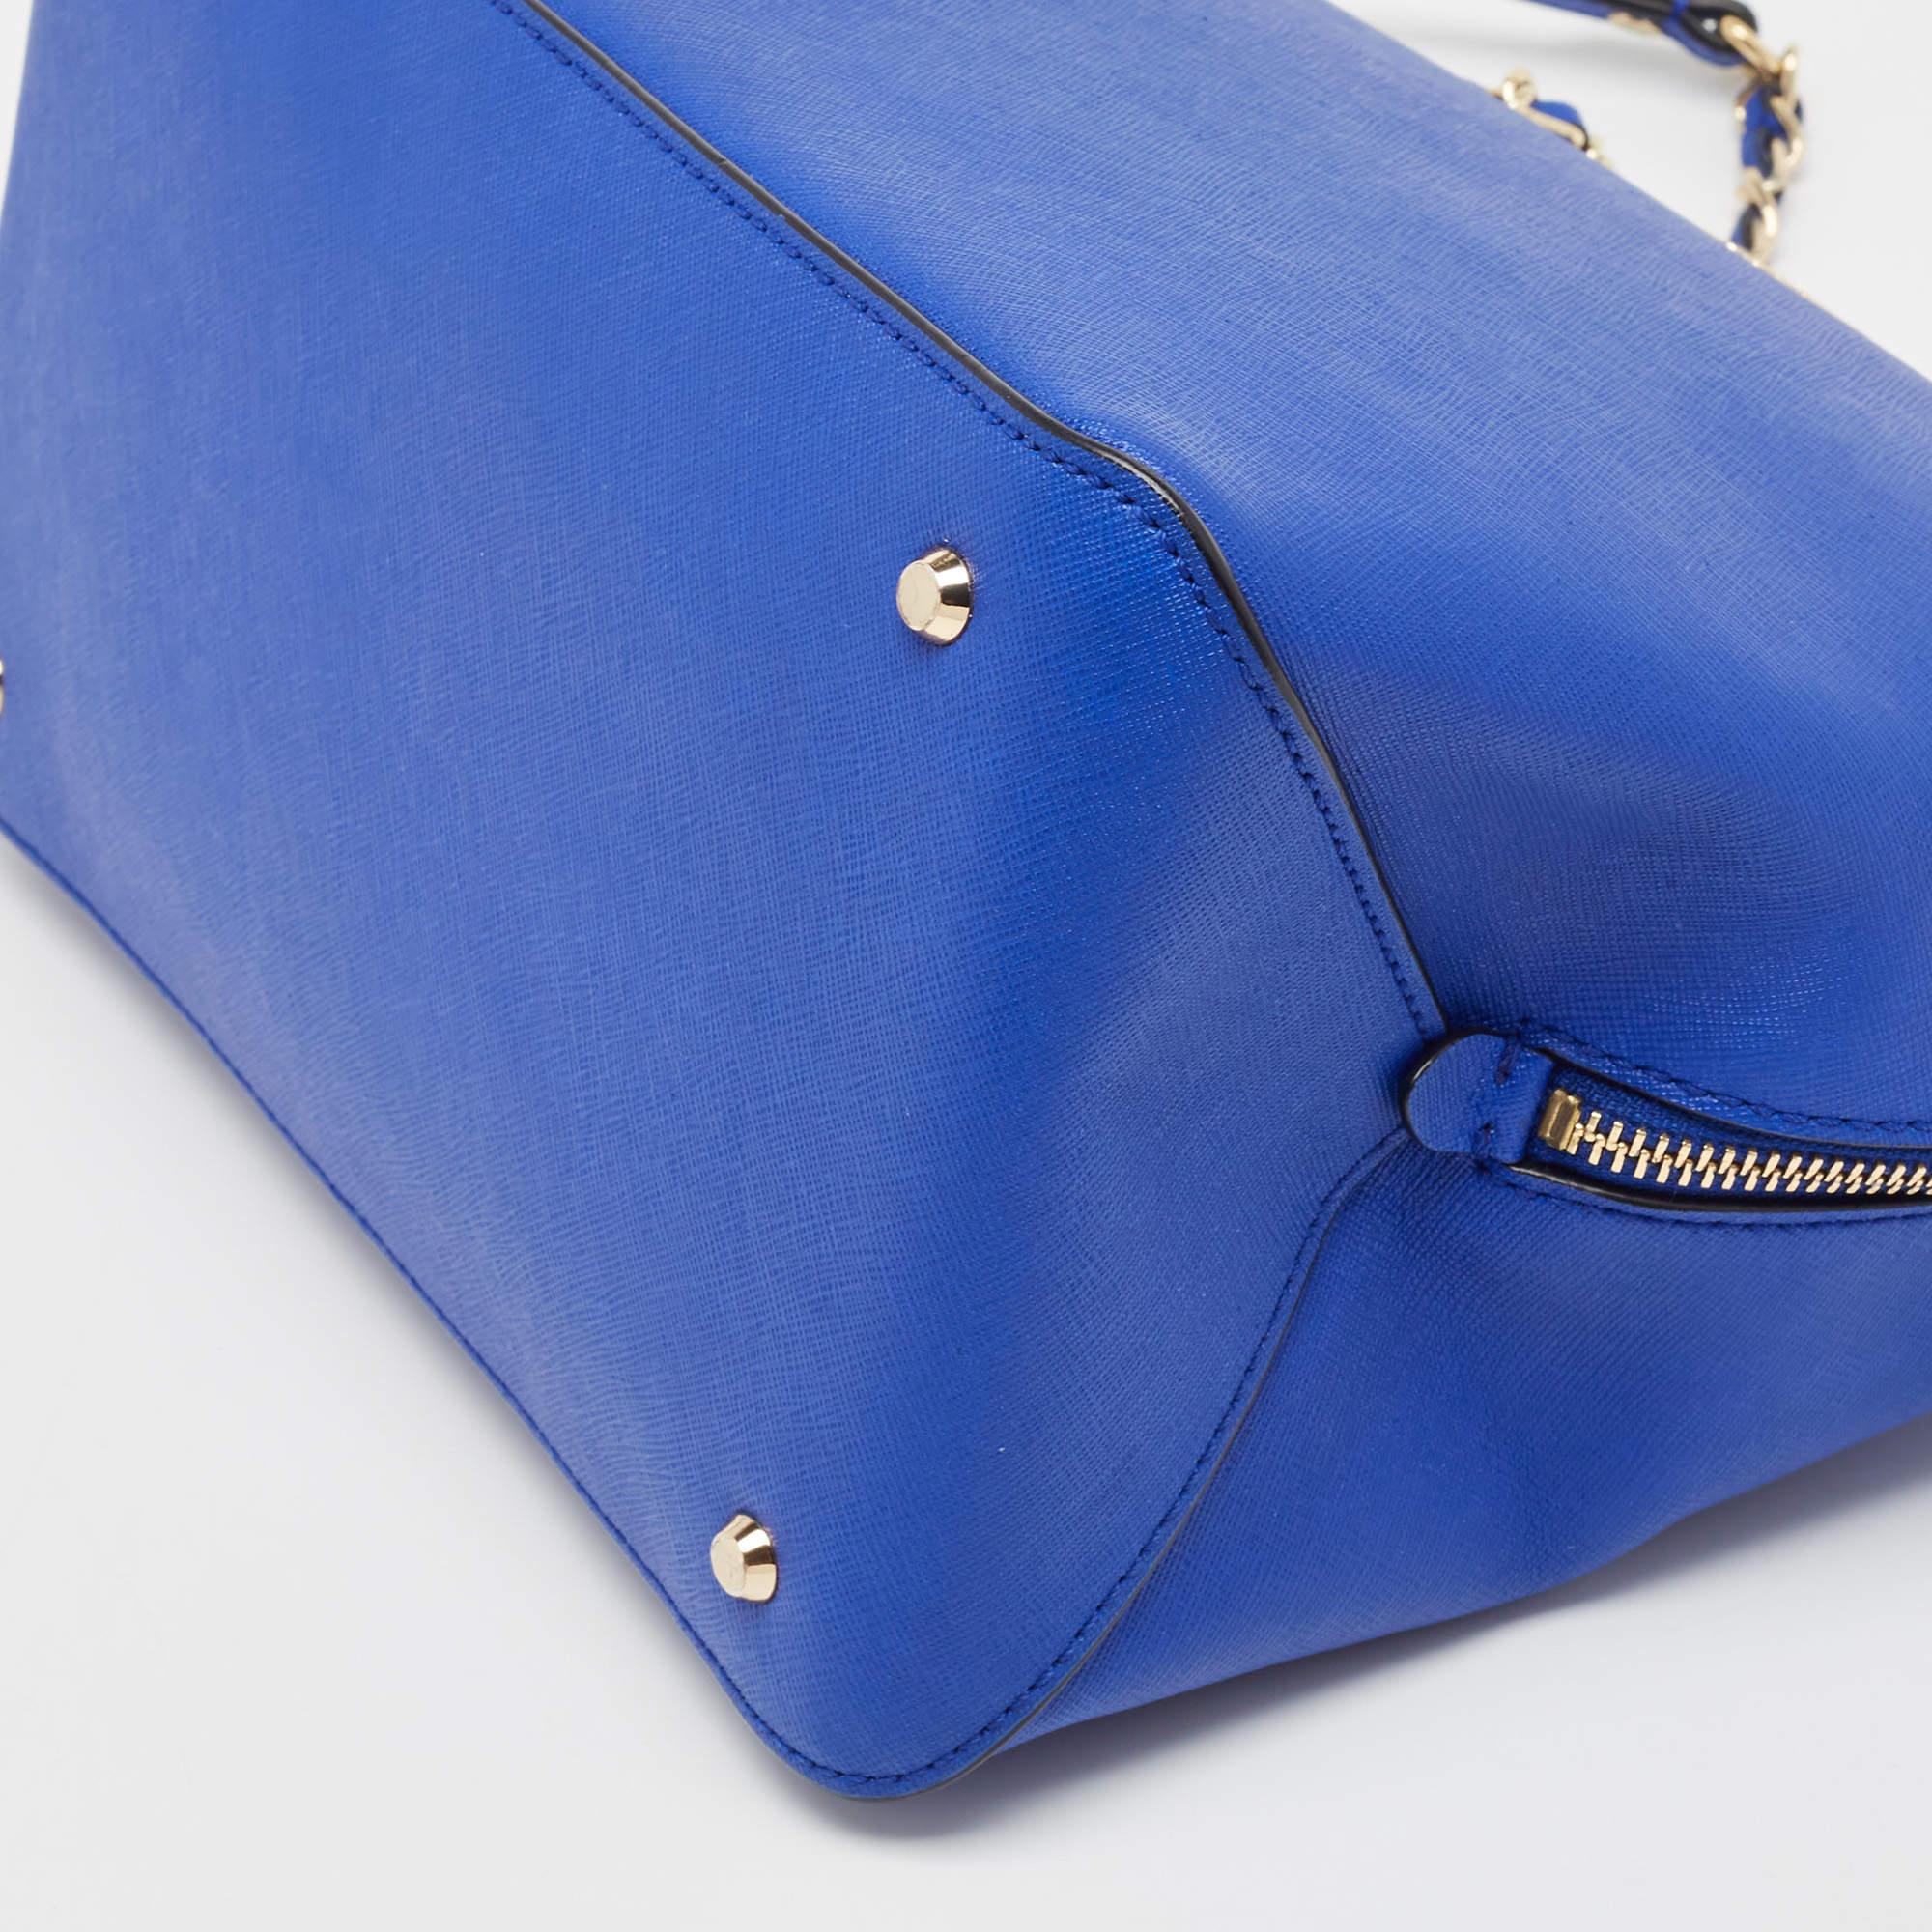 Dkny Blue Saffiano Leather Dome Shoulder Bag 11